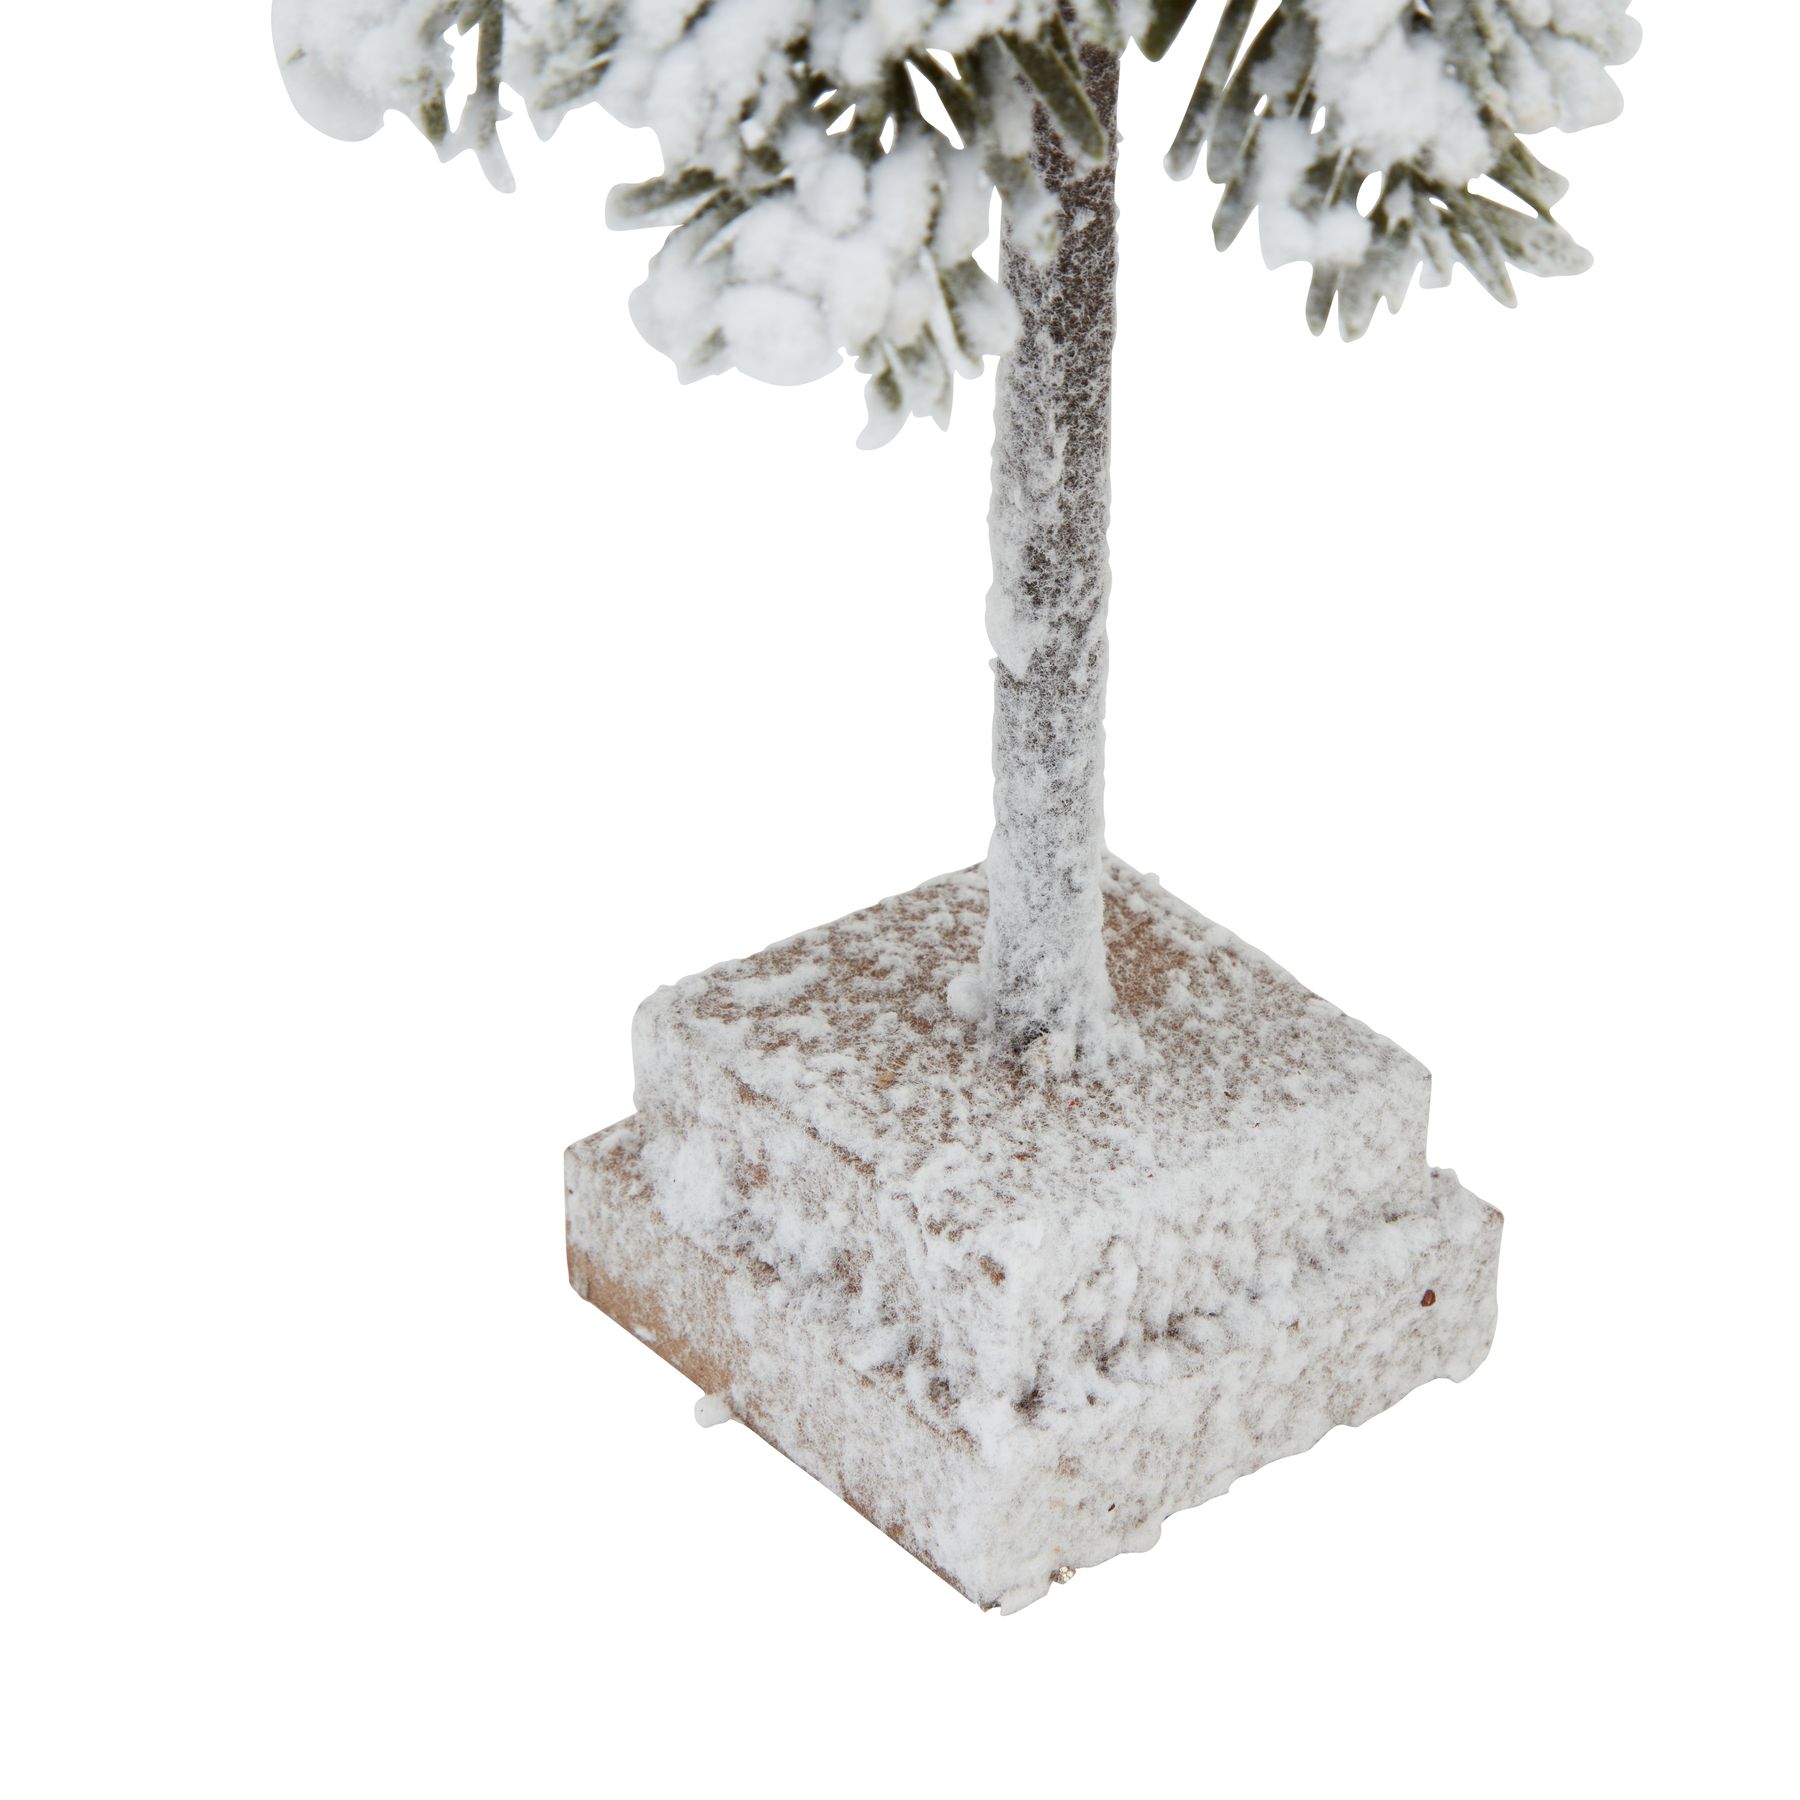 Small Snowy Cedar Tree On Wood Block - Image 3